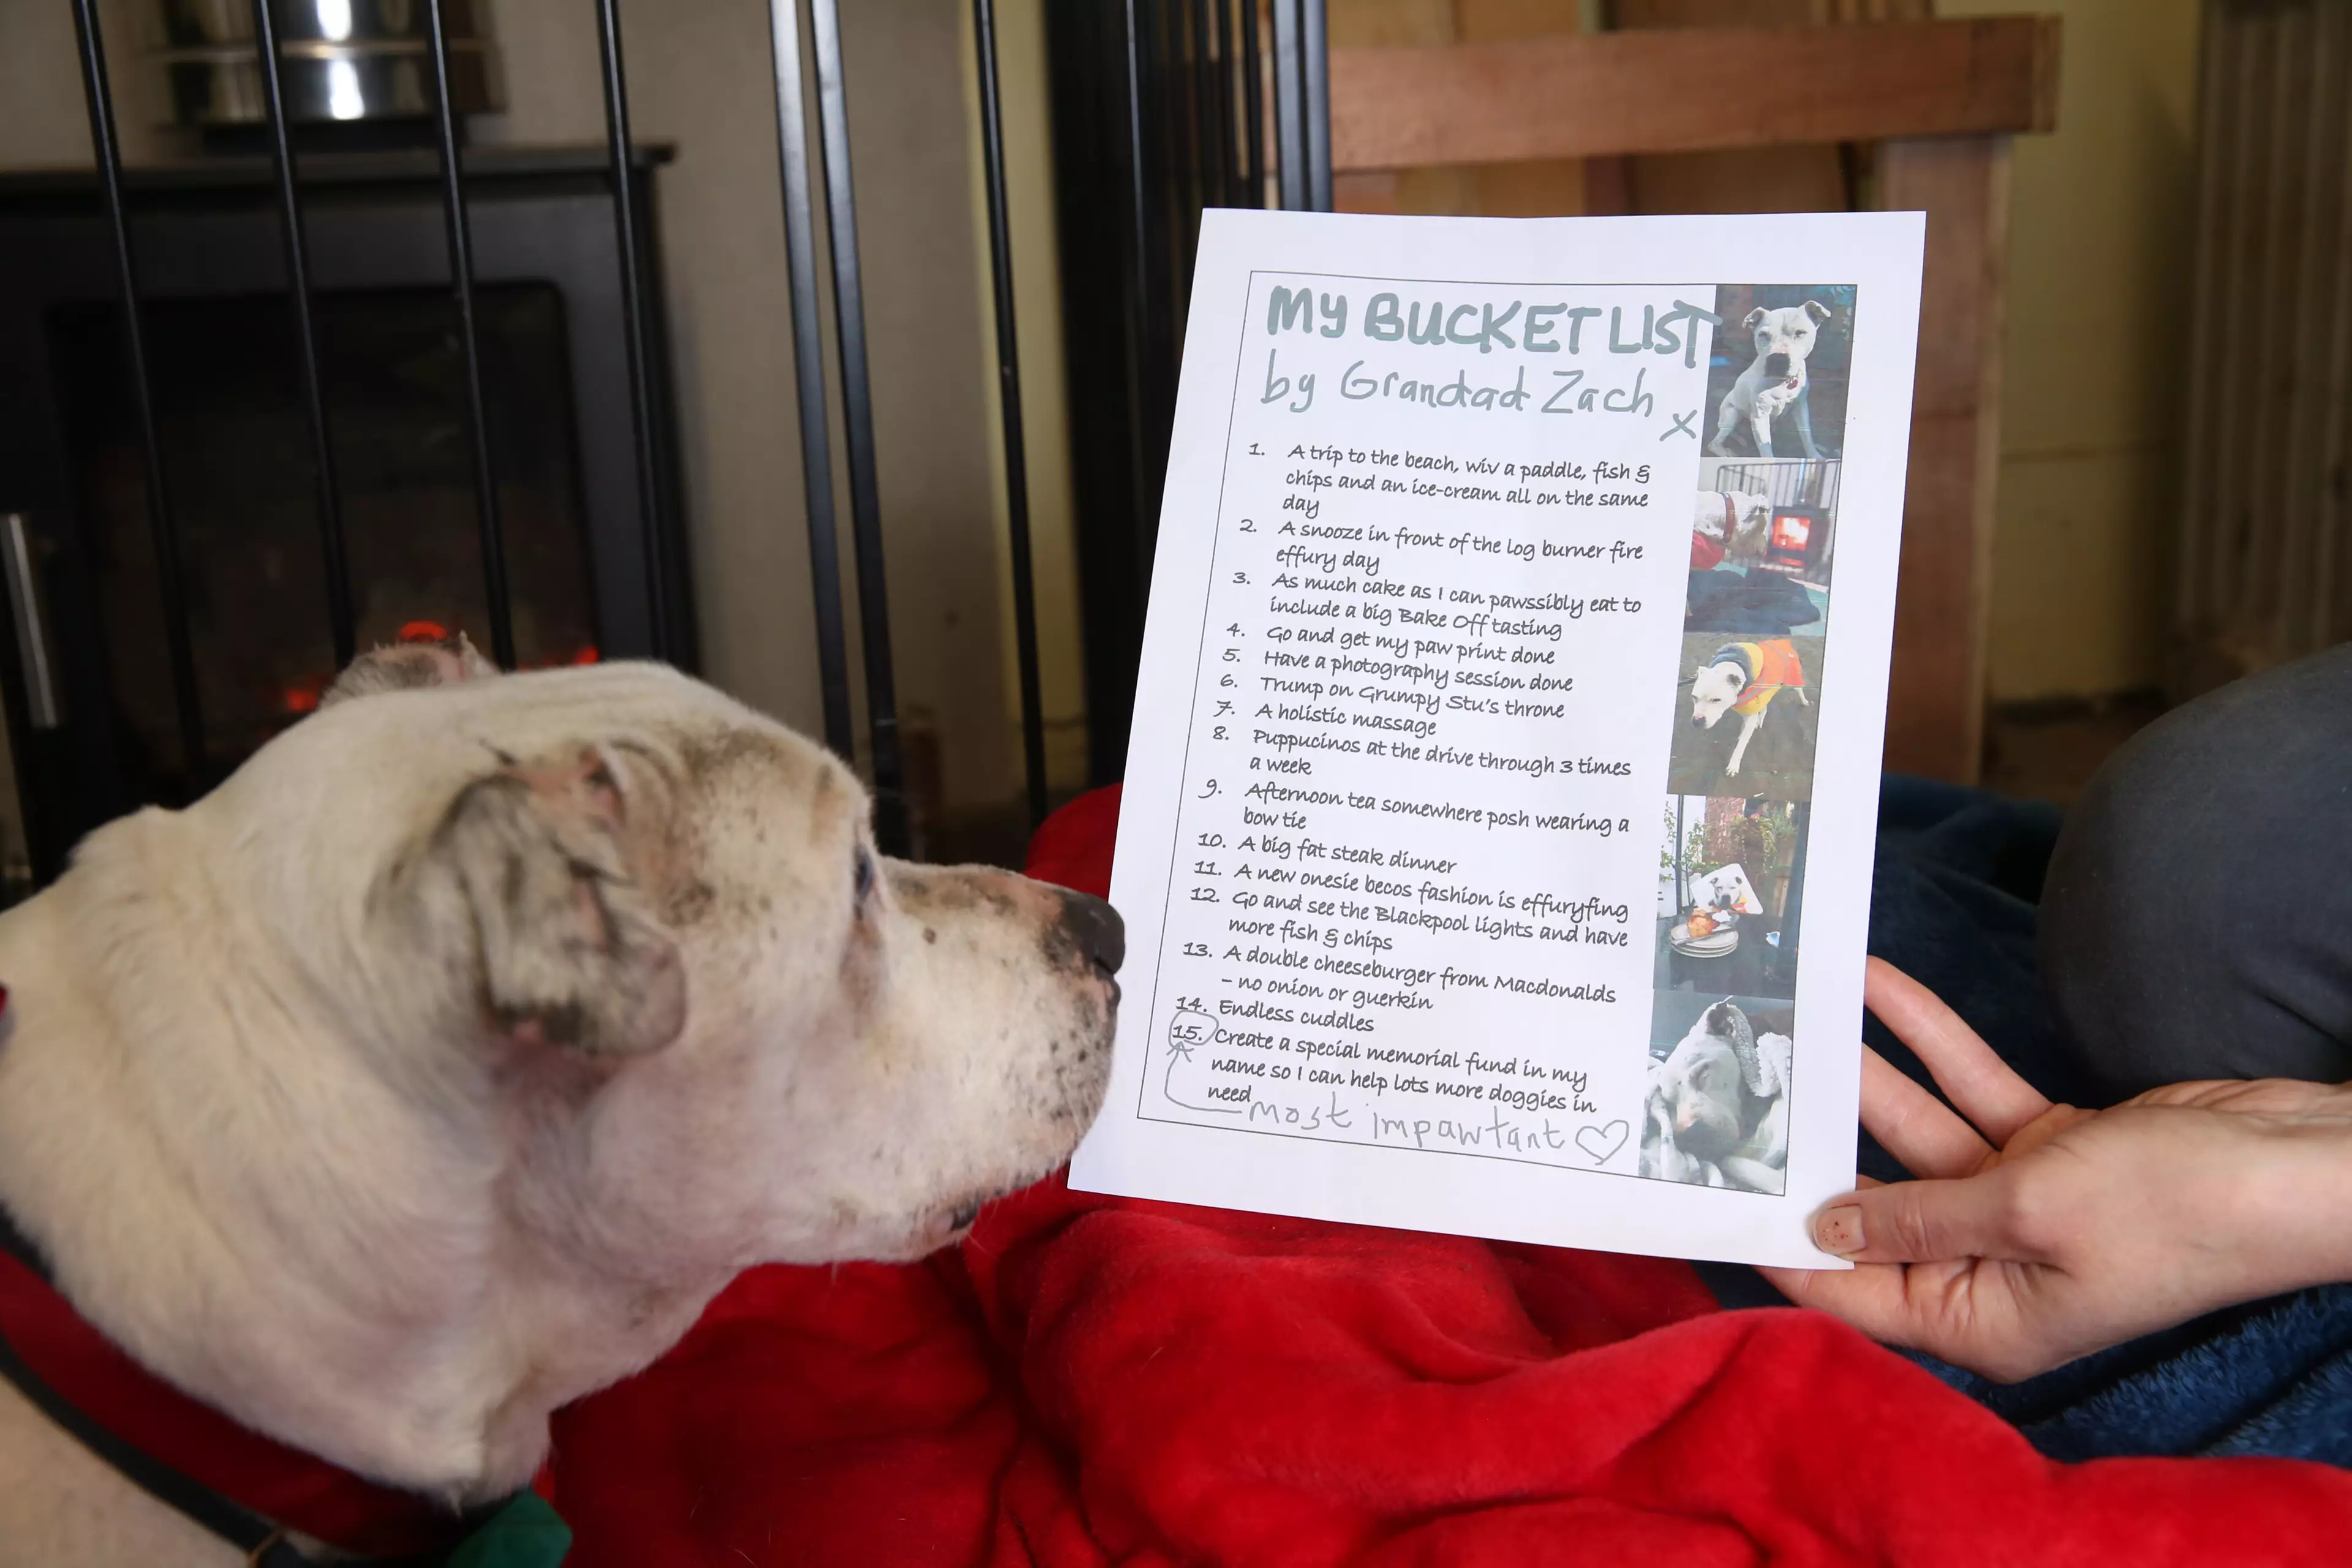 Doggo Zach, 16, is slowly completing his bucket list (